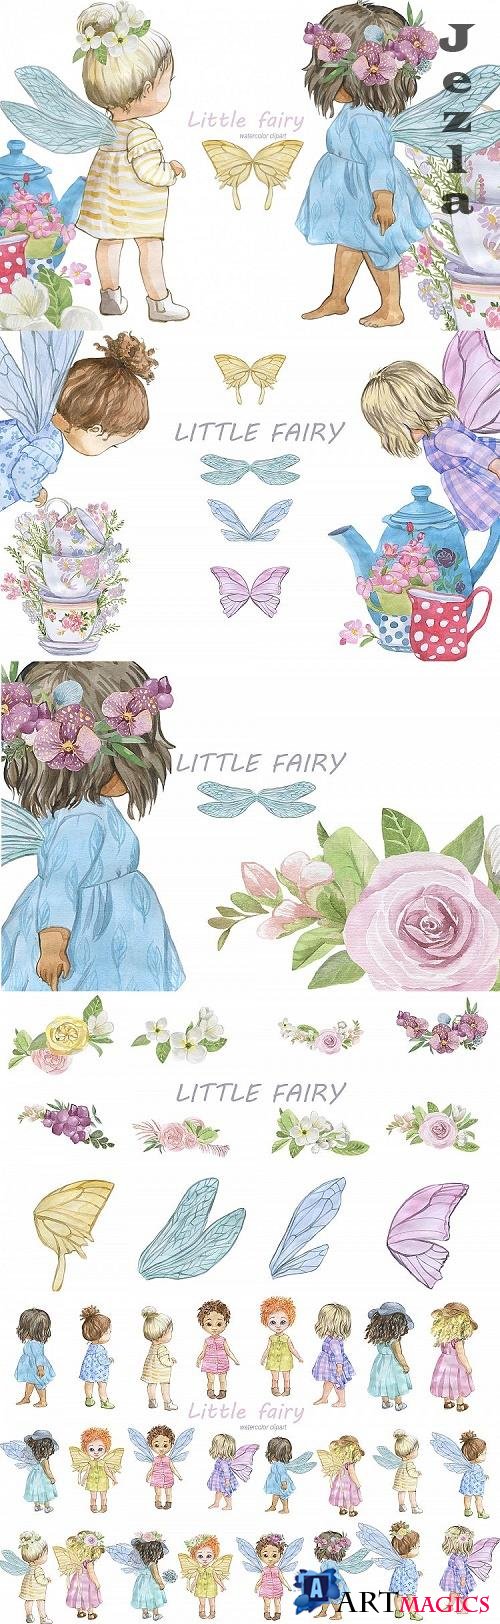 Little Fairies - 522937